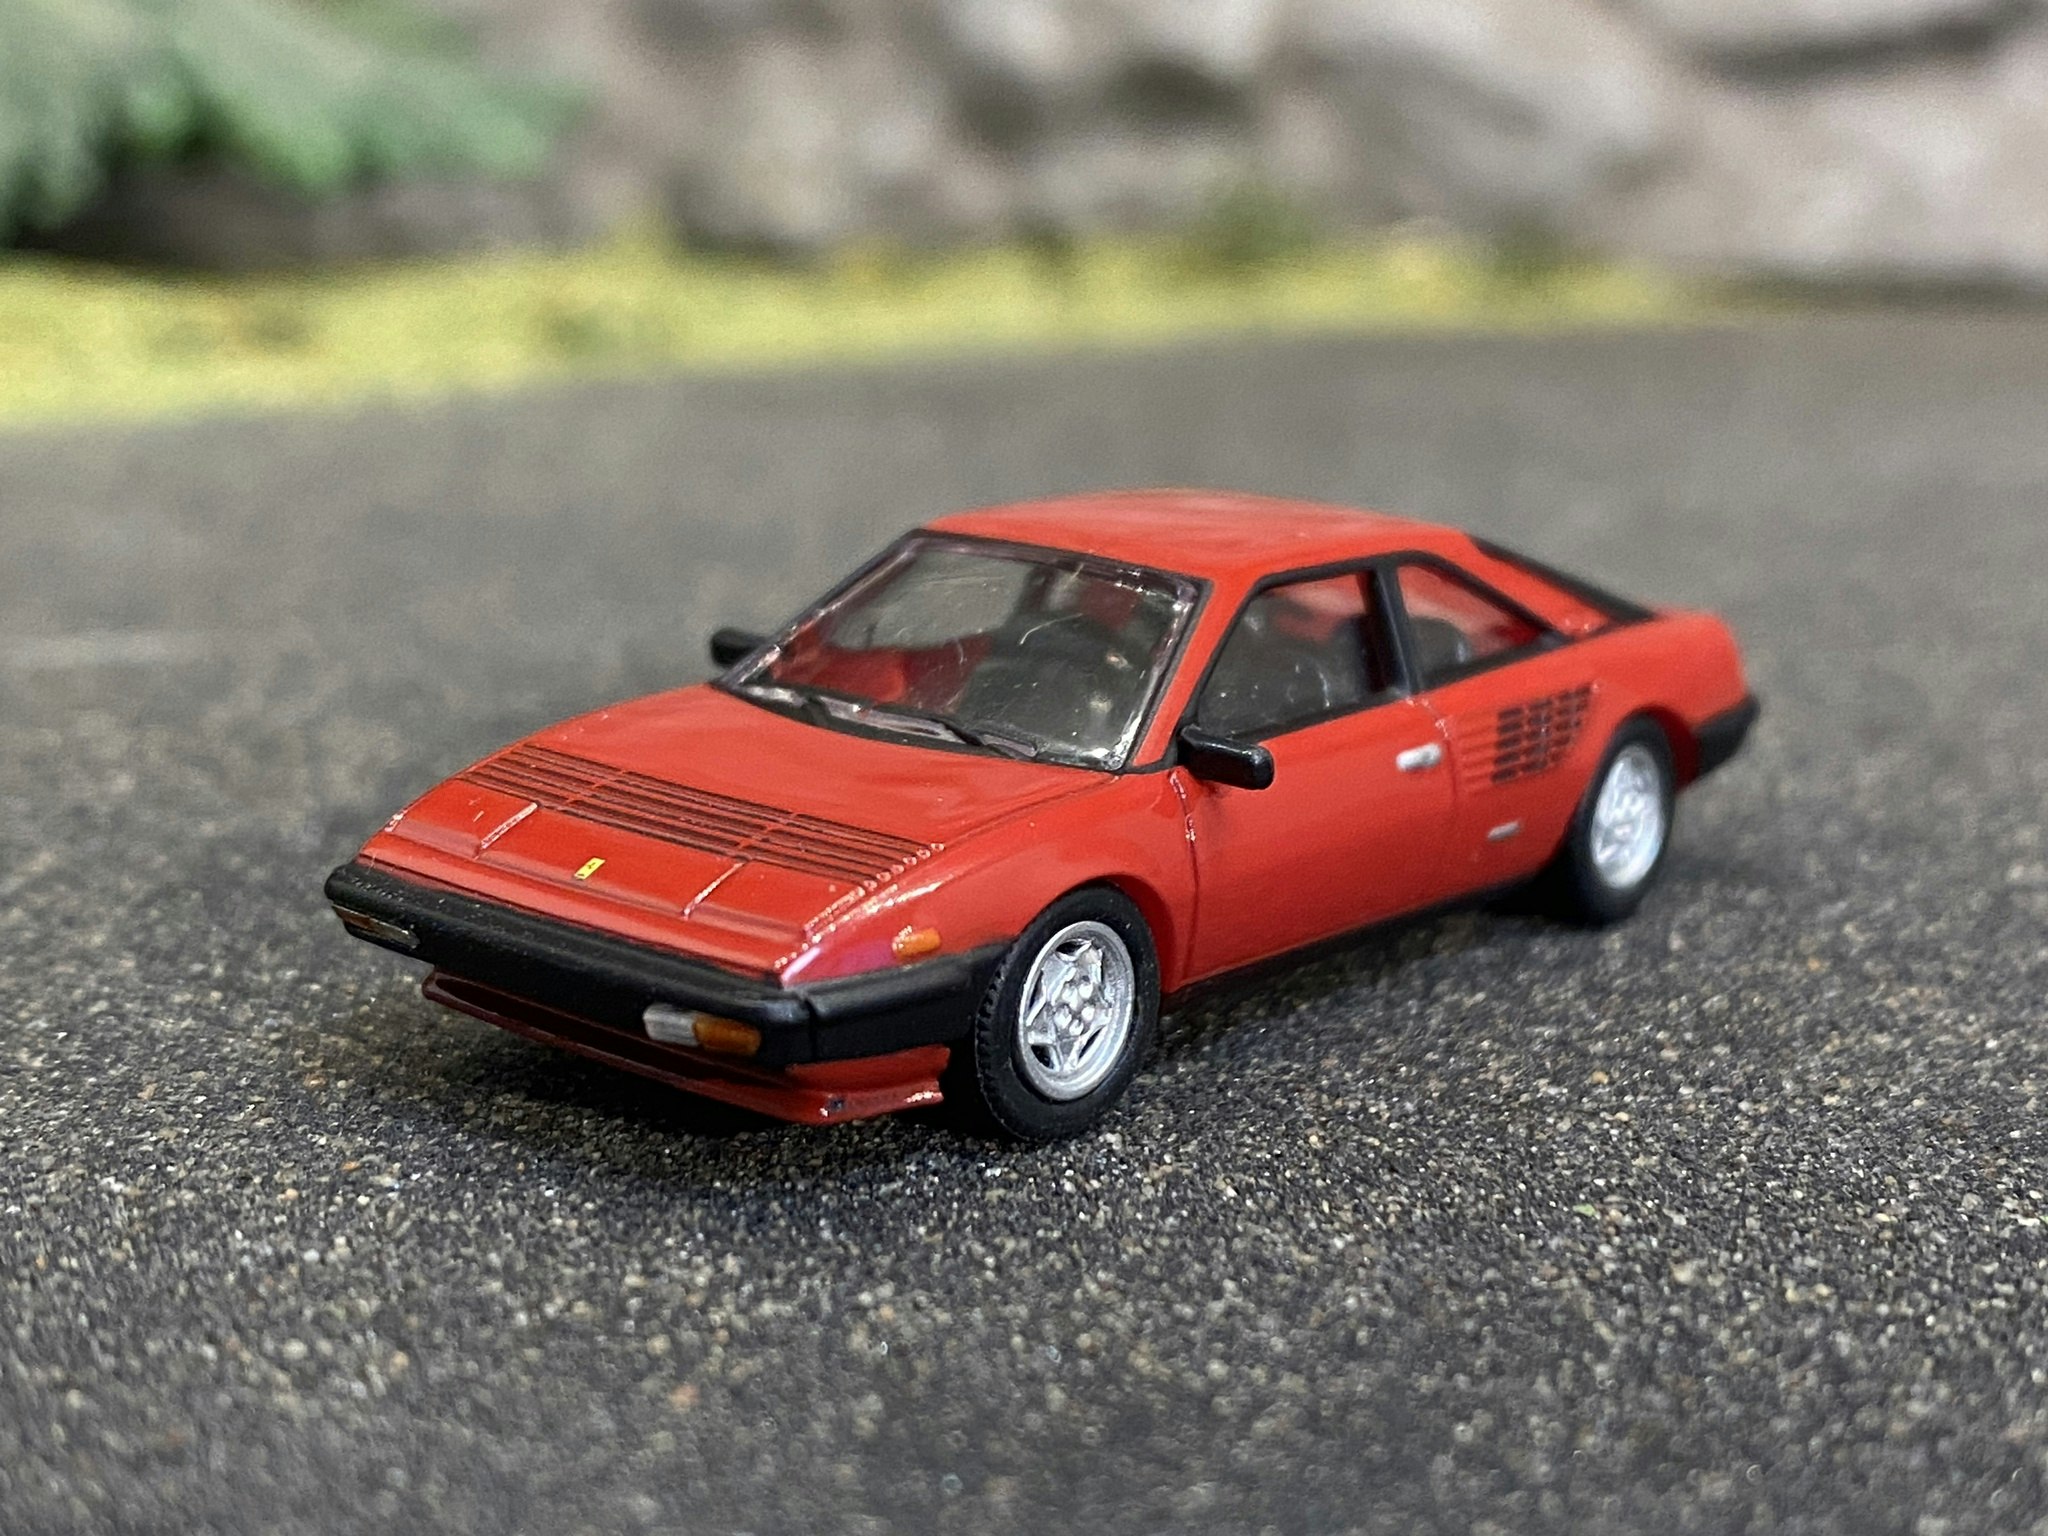 Skala 1/87 - Ferrari Mondial, Röd från PCX87